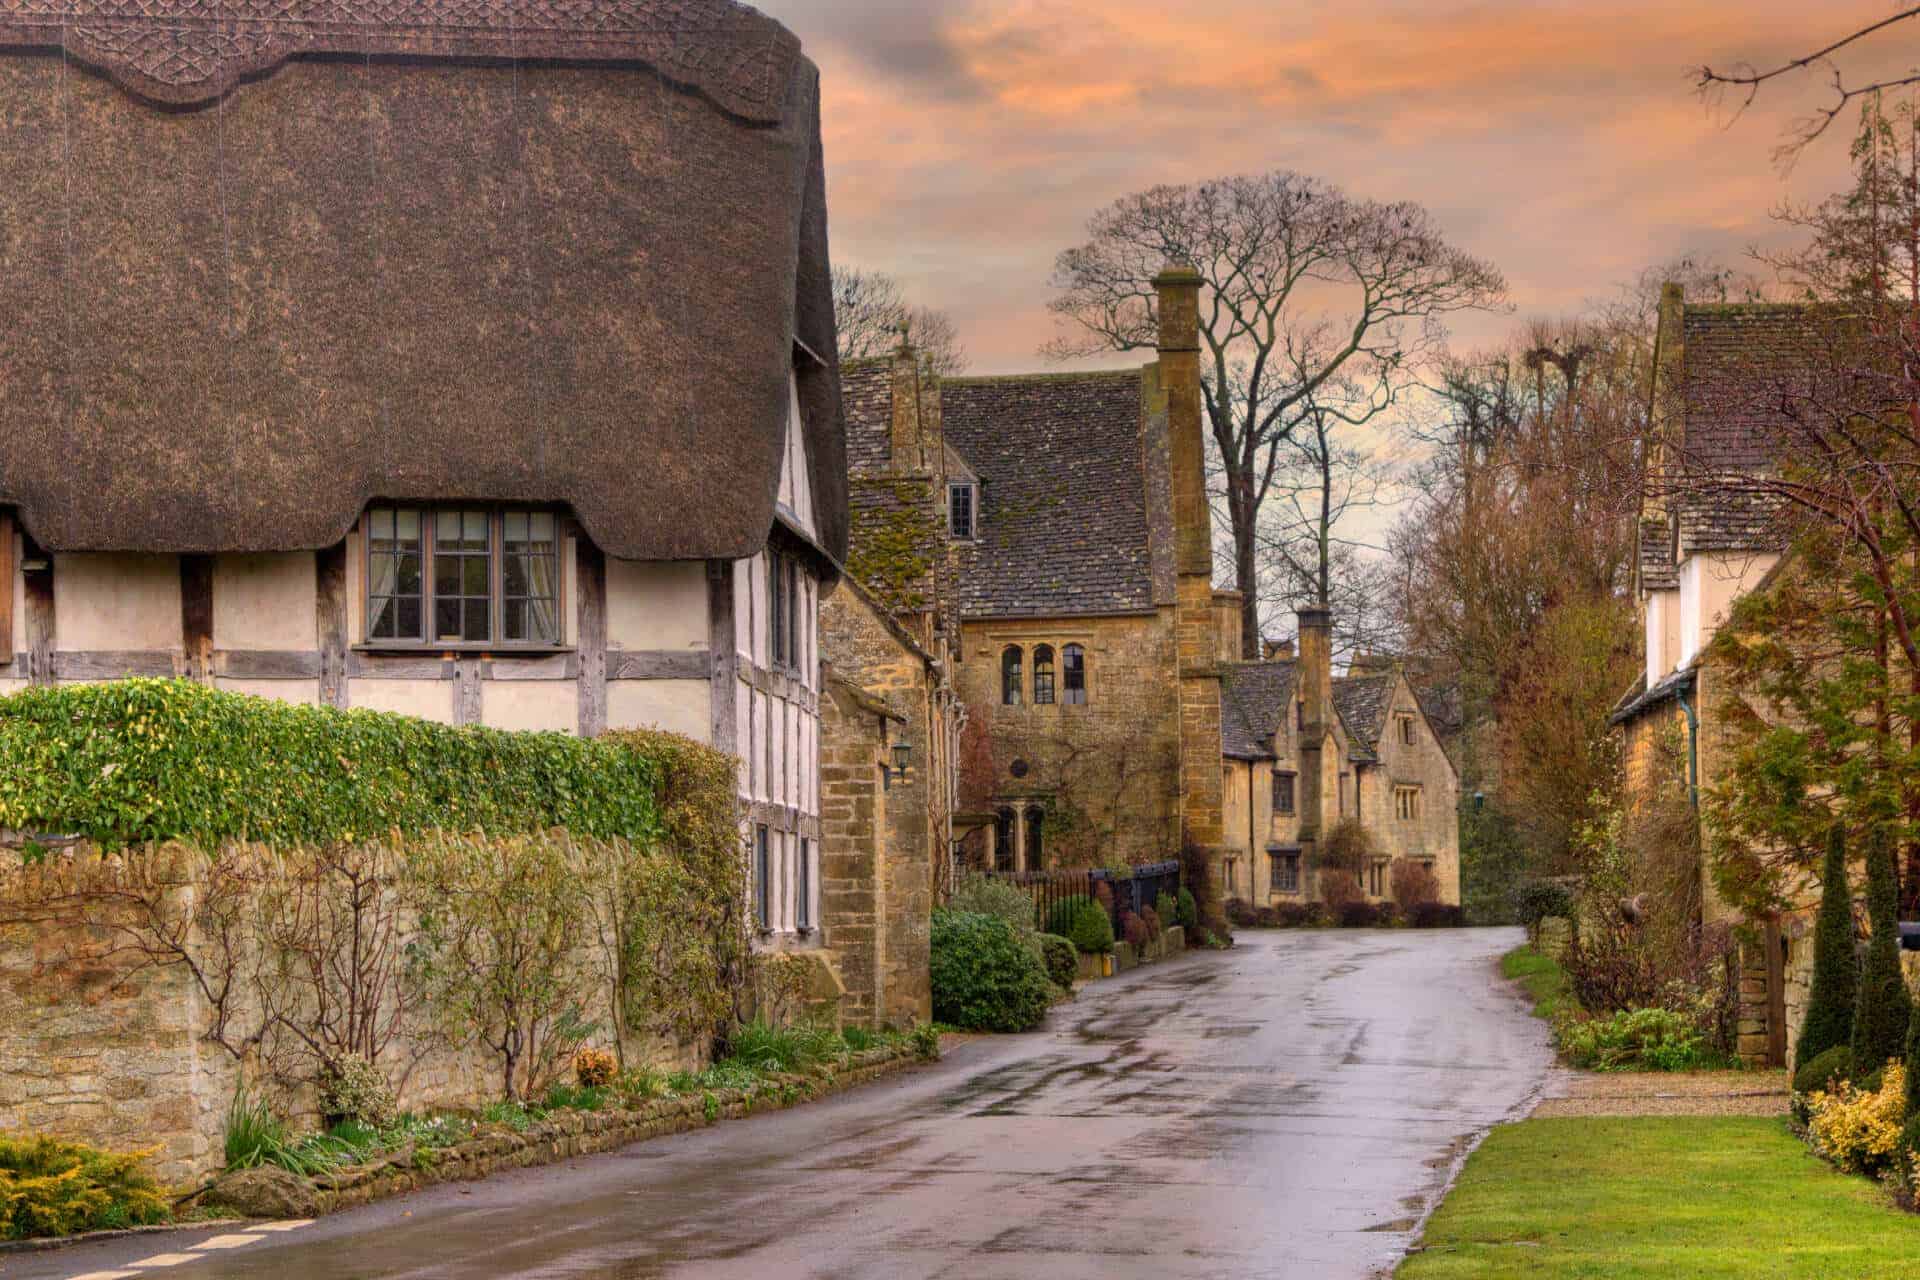 The Village of Euxton, Lancashire, England. An ancient English